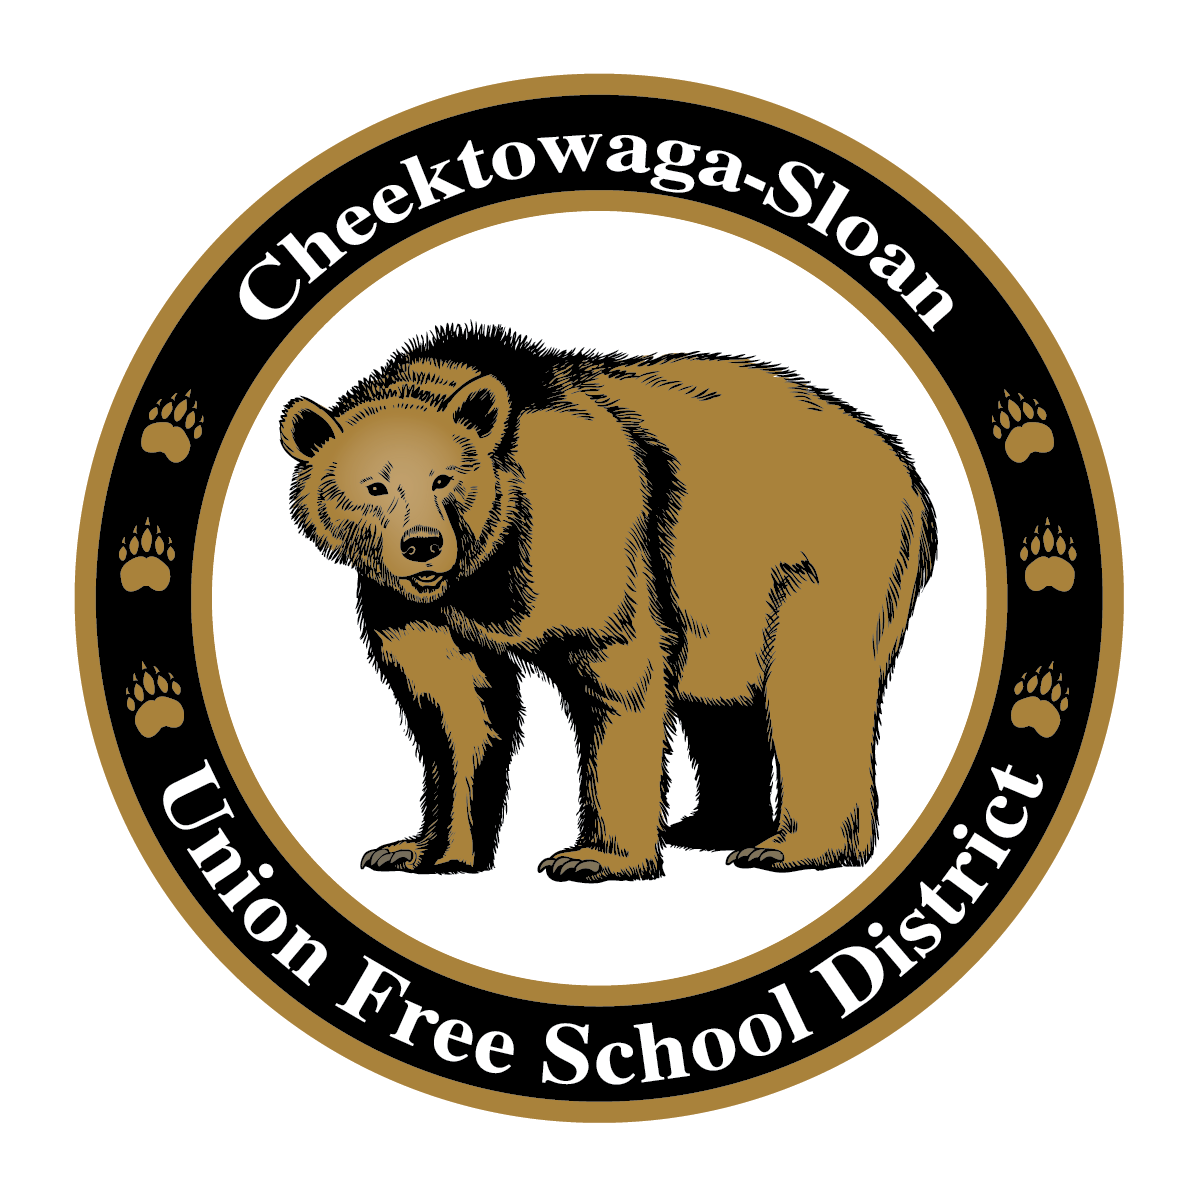 Cheektowaga-Sloan Union Free School District